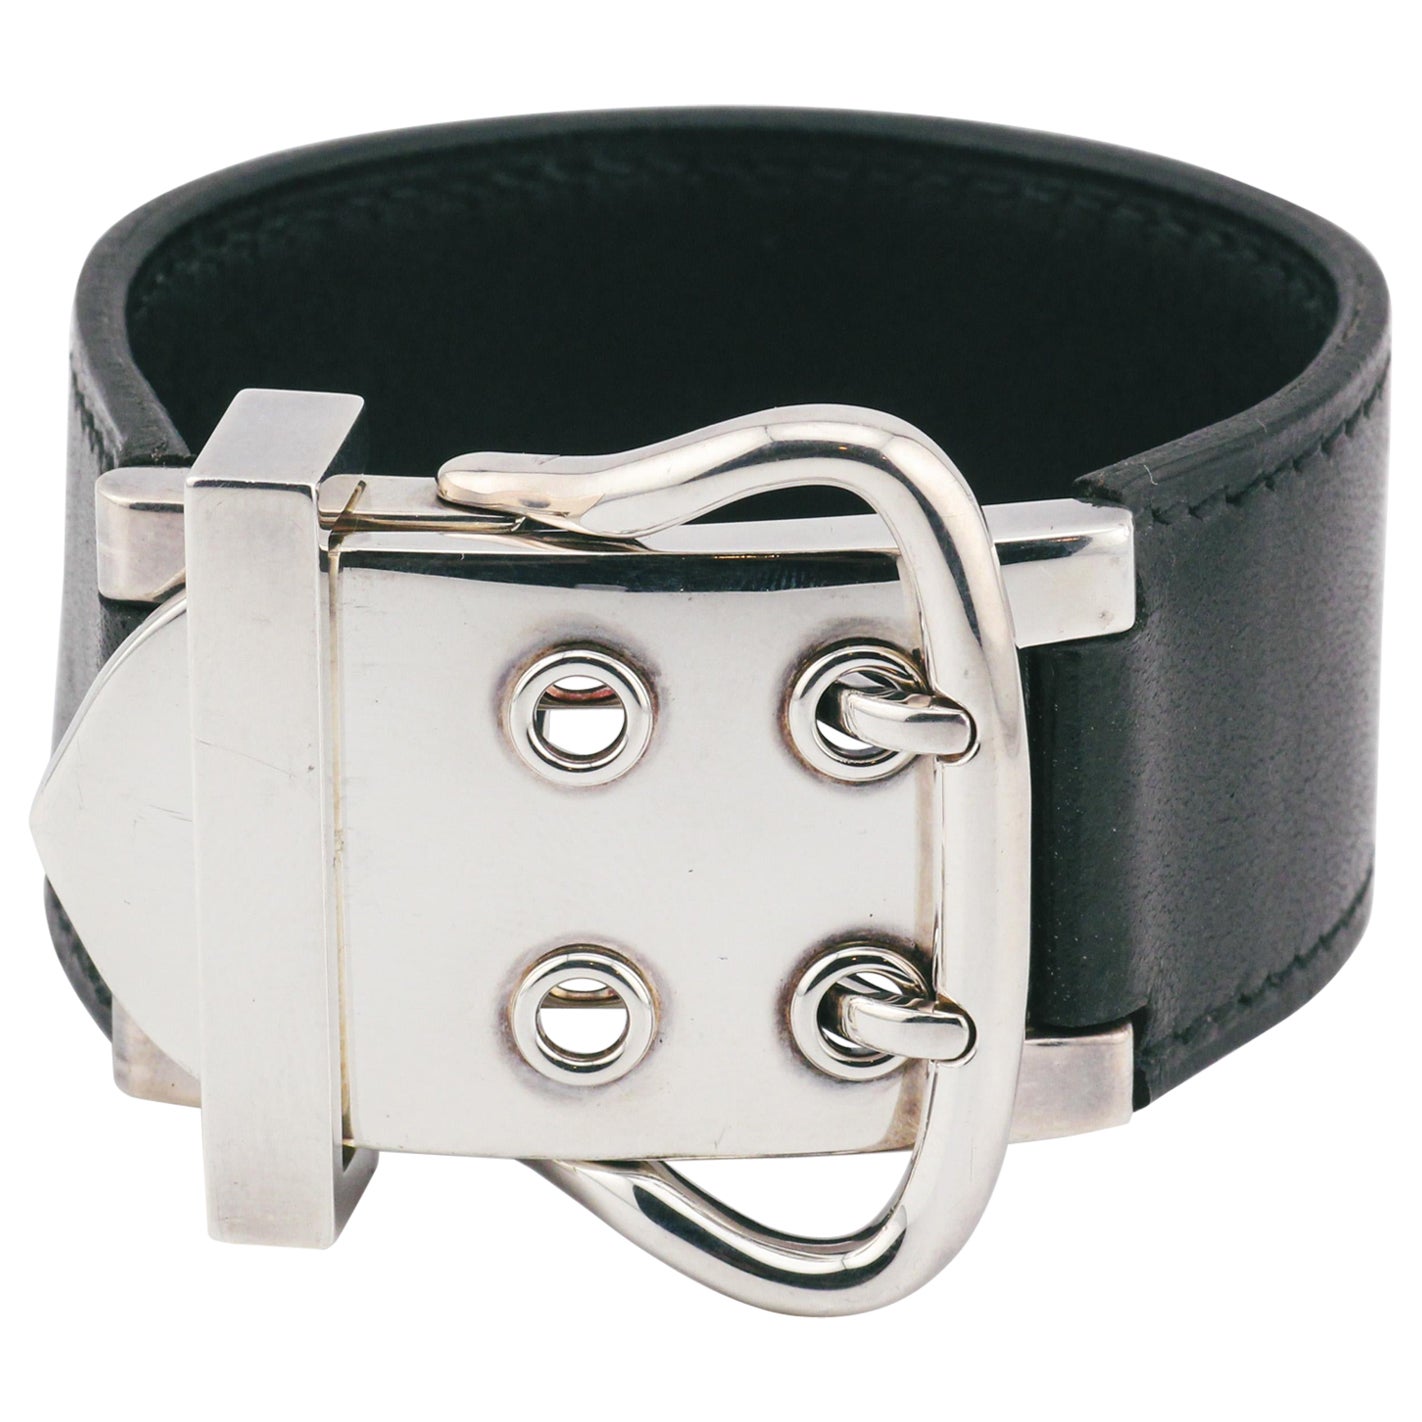 Camaragrancanaria Shop - Hermes Bracelet 2799 - La cote des montres Hermes  Belt doccasion